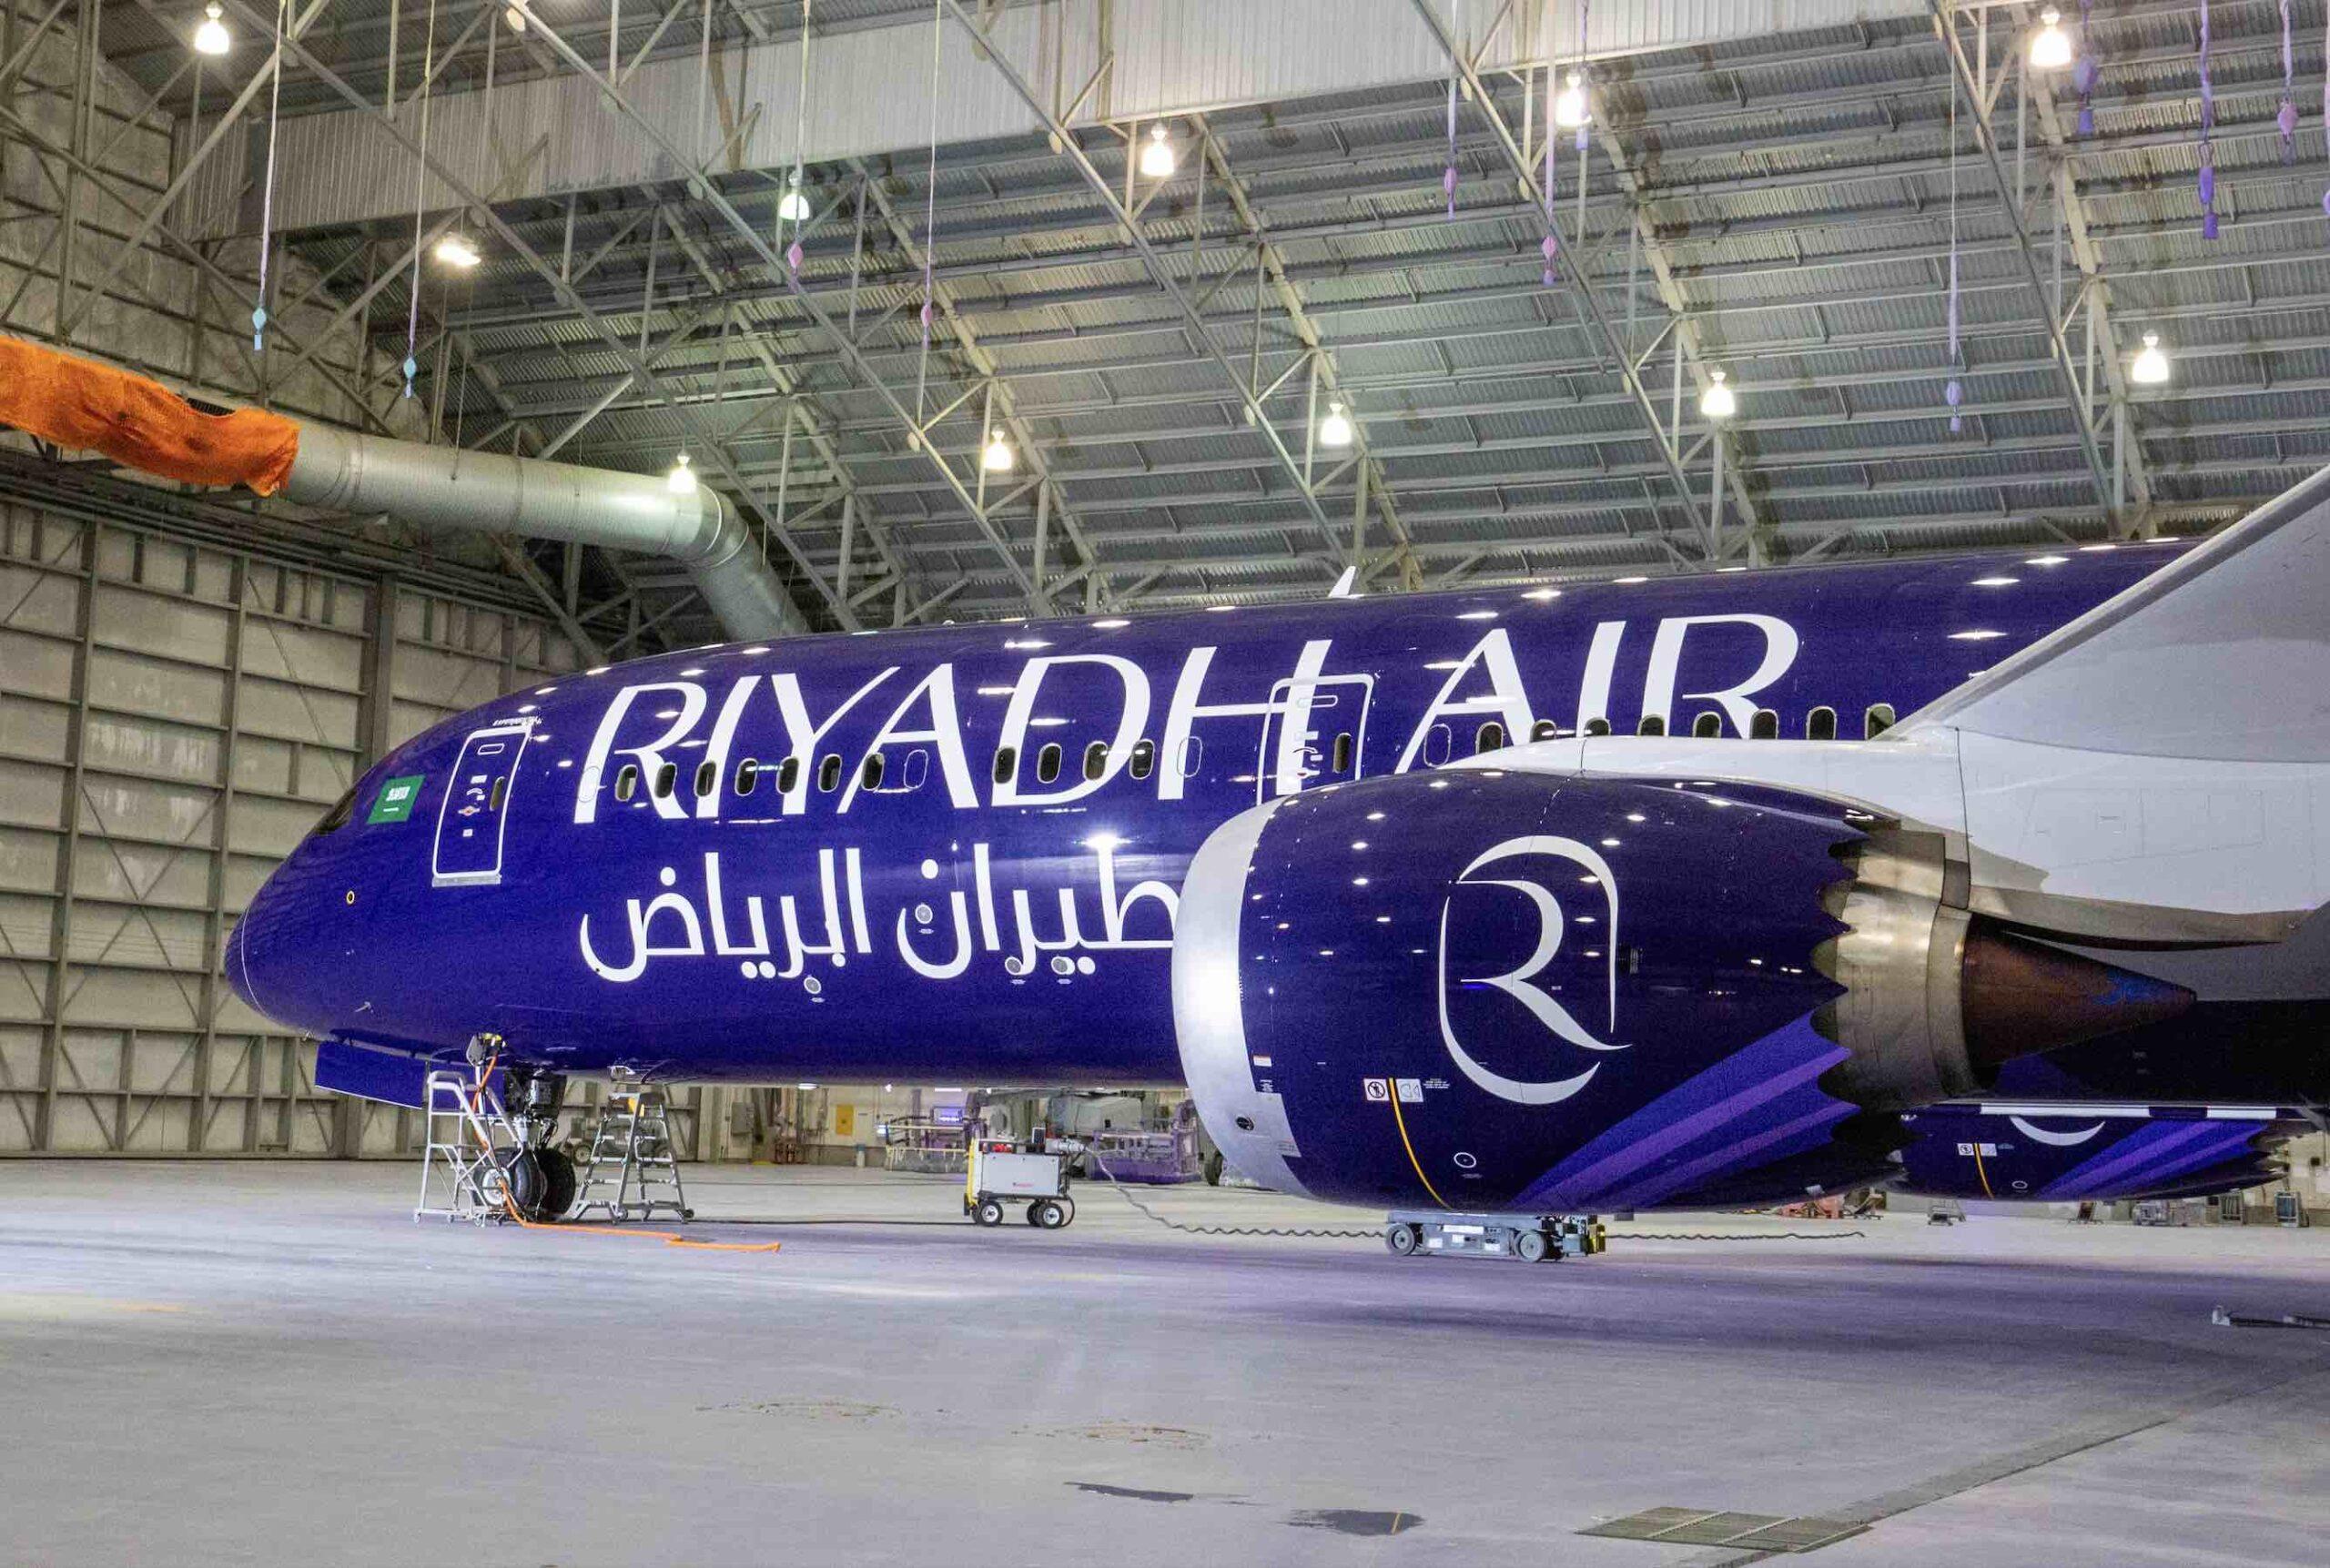 Check out Riyadh Air’s dramatic design for its first plane 